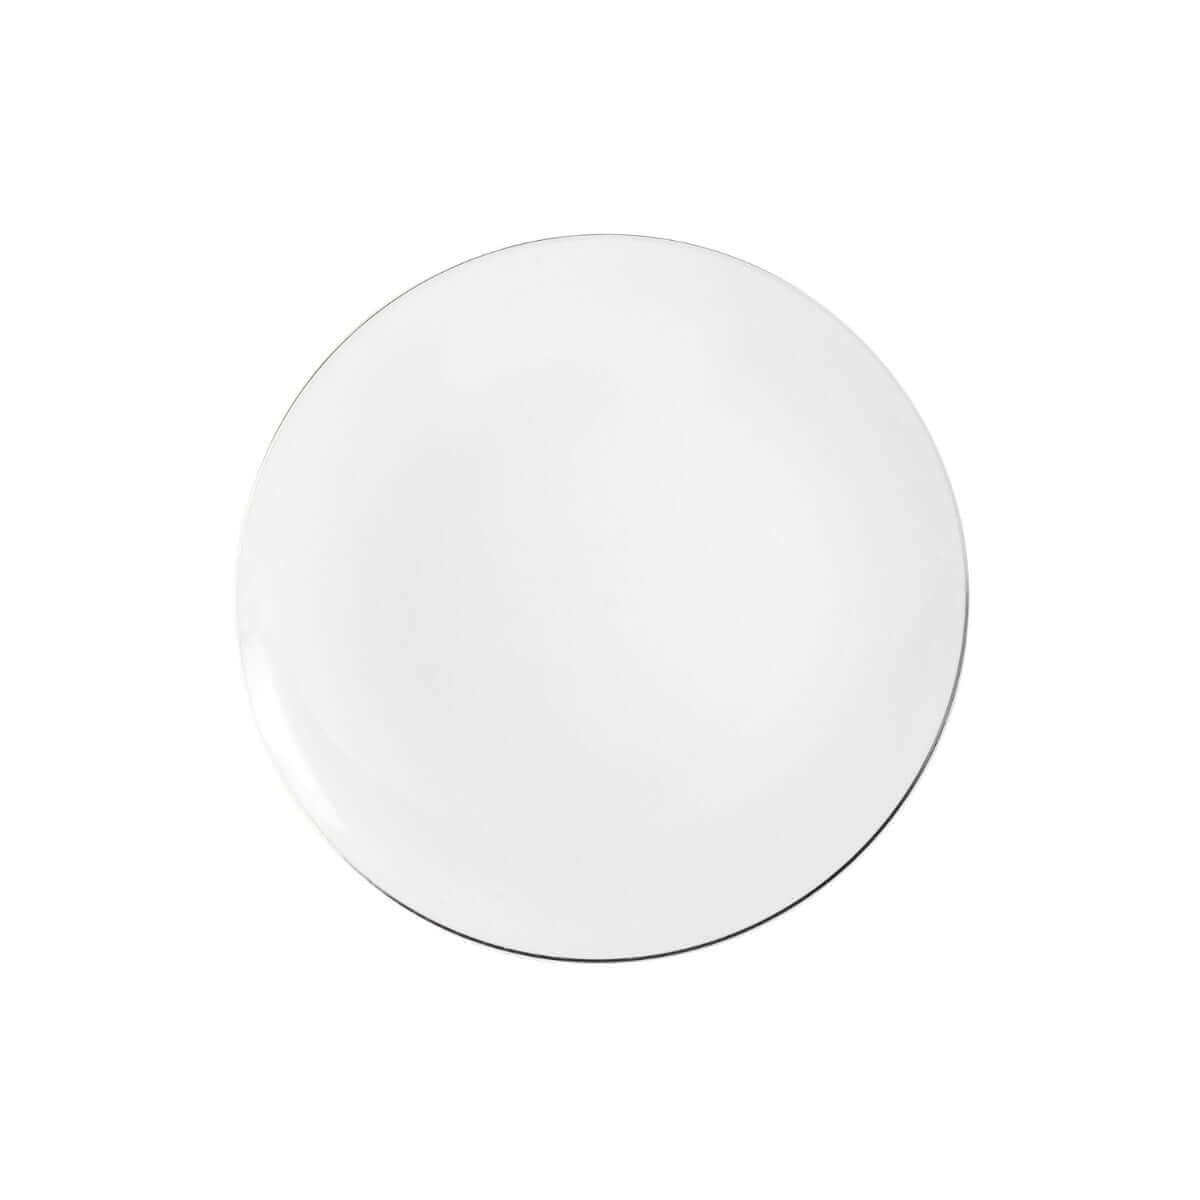 8" Classic Silver Design Plastic Plates (120 Count) - Yom Tov Settings